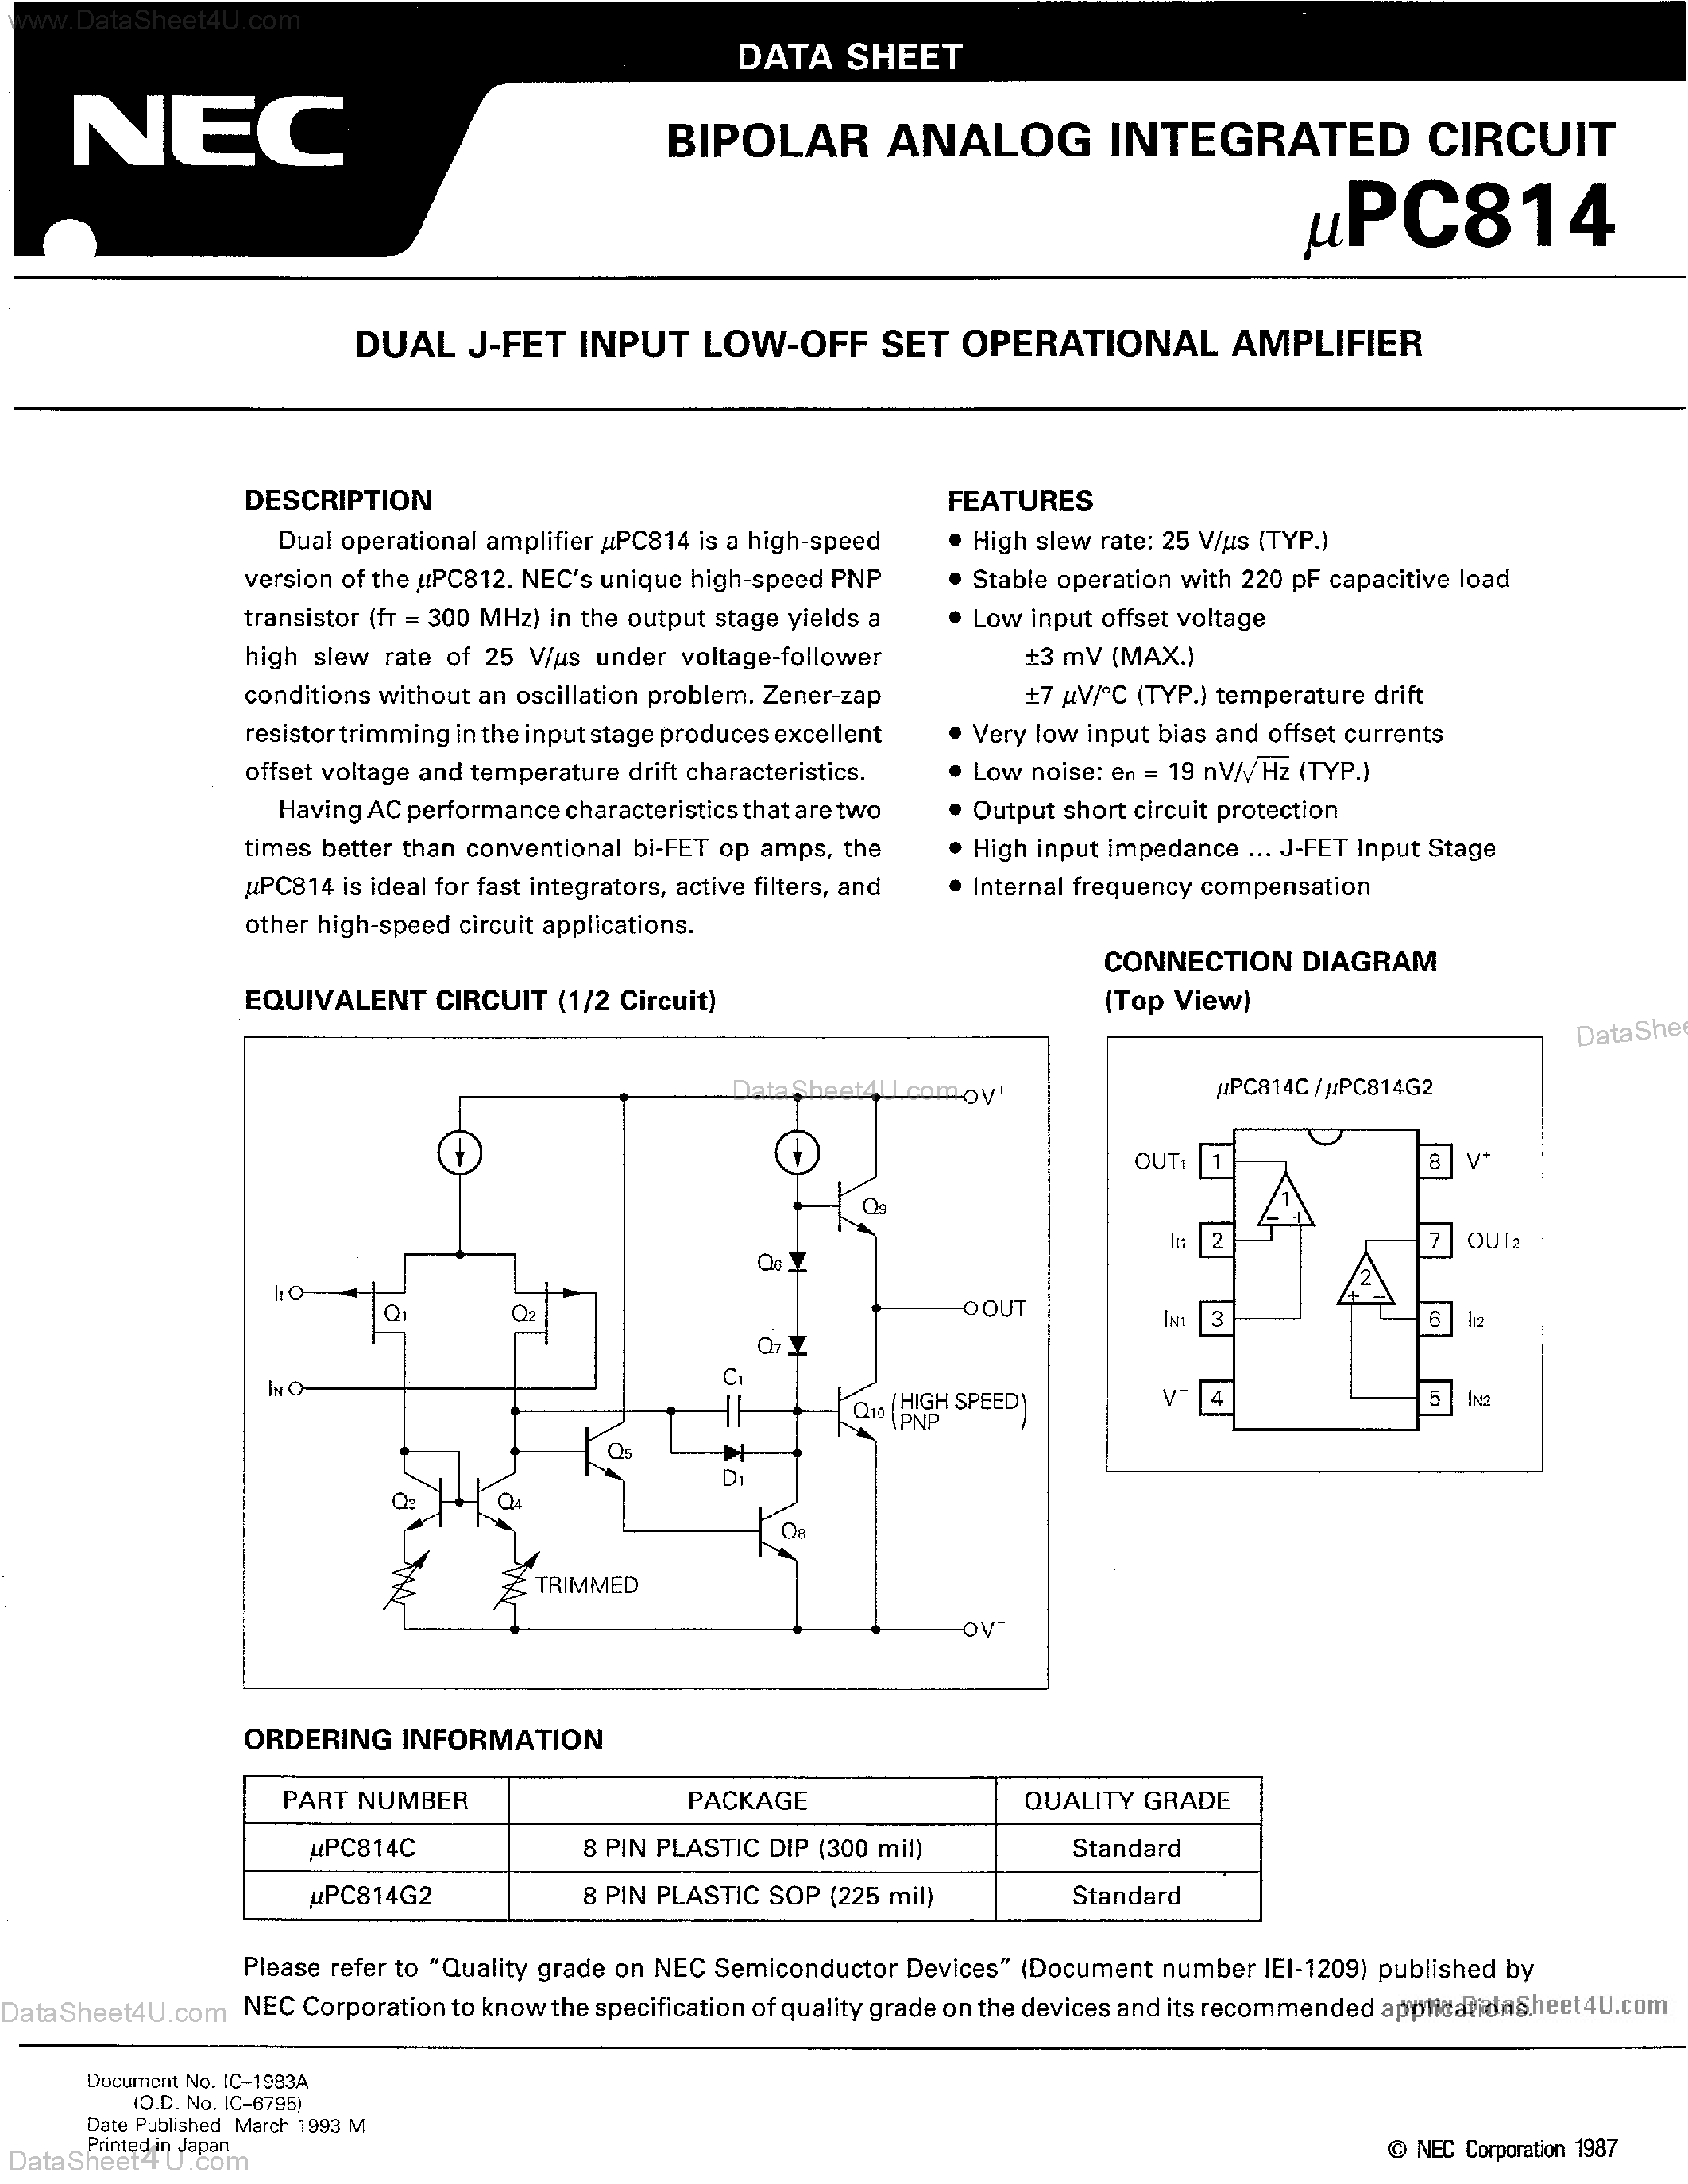 Datasheet UPC814 - Dual J-FET Input Low Off Set Operational Amplifier page 1